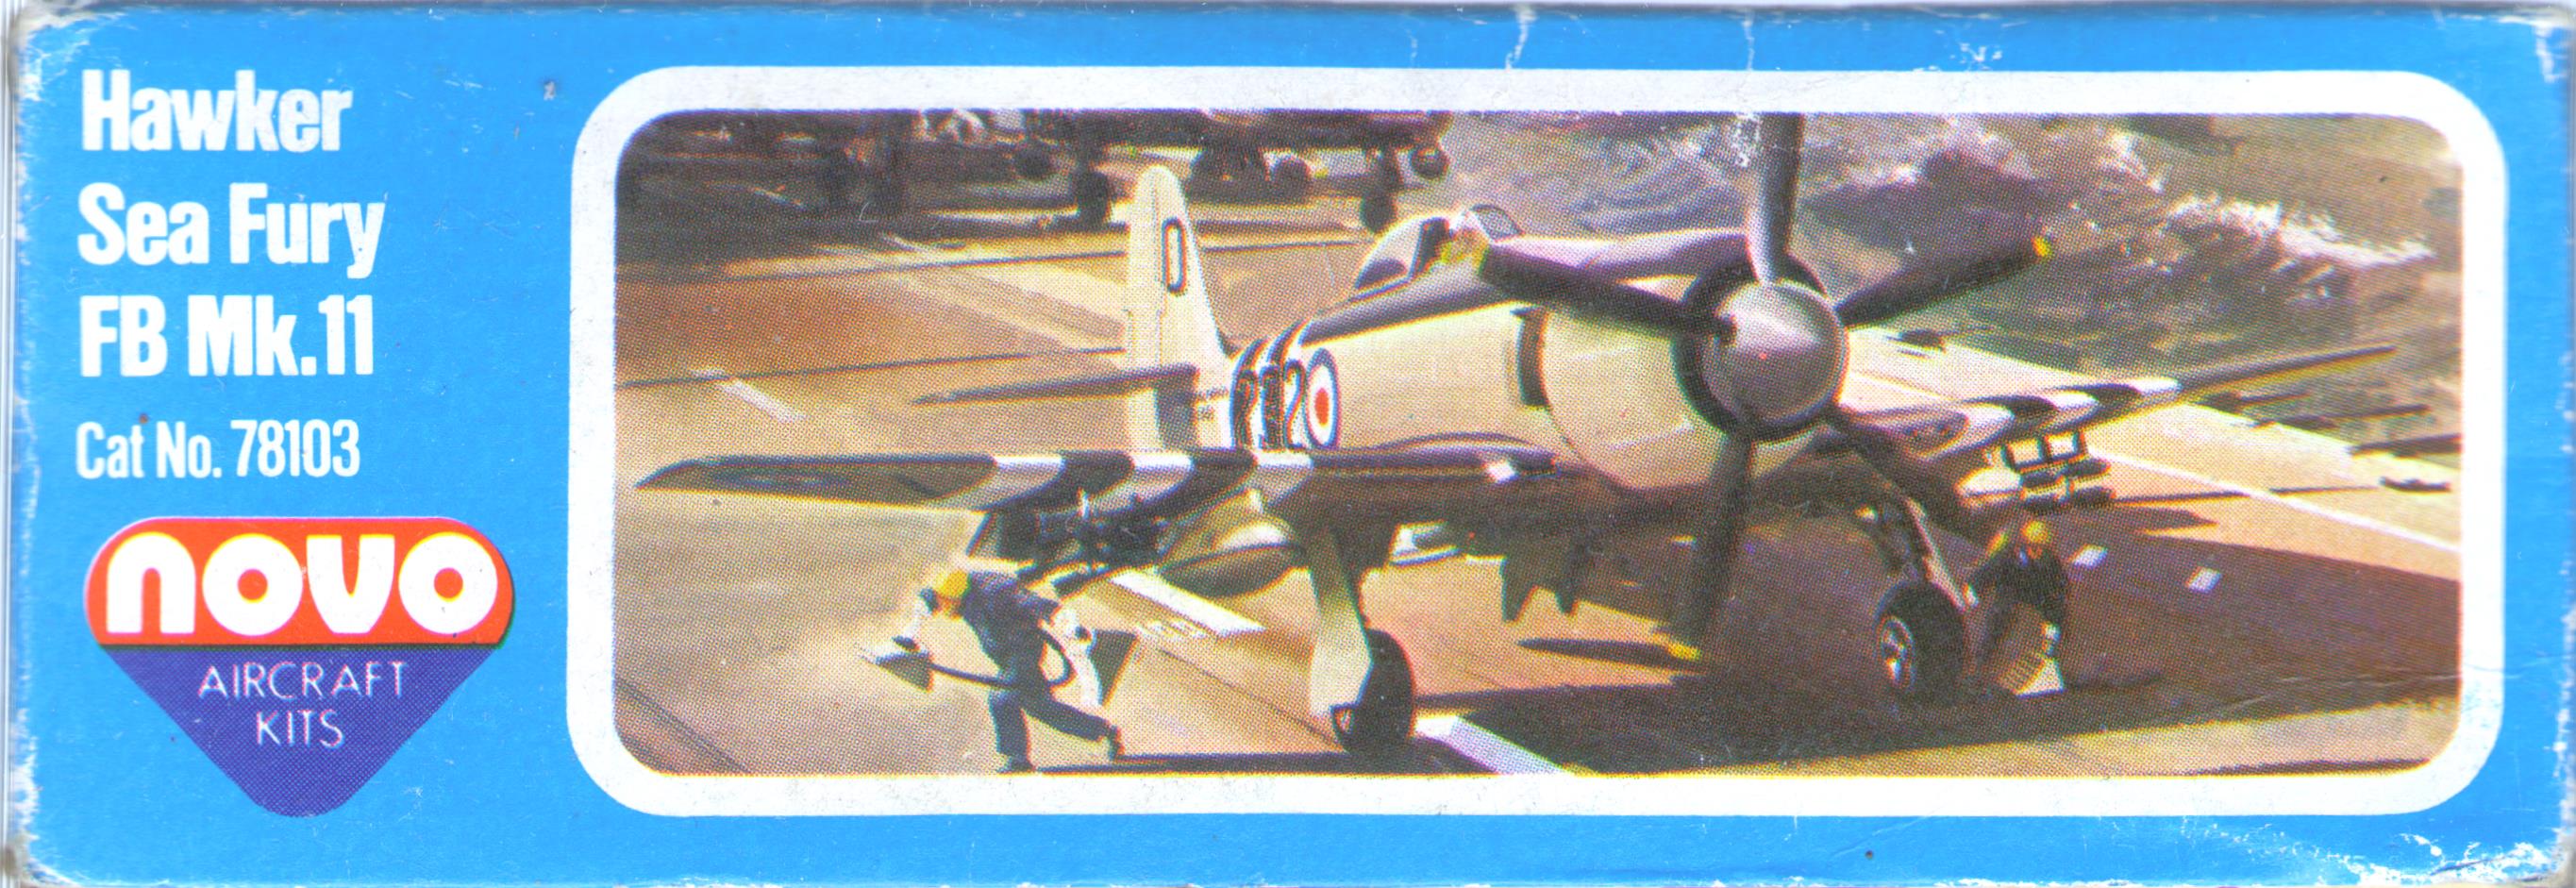 Малая сторона коробки NNOVO Toys Ltd F154 Hawker Sea Fury, 1980